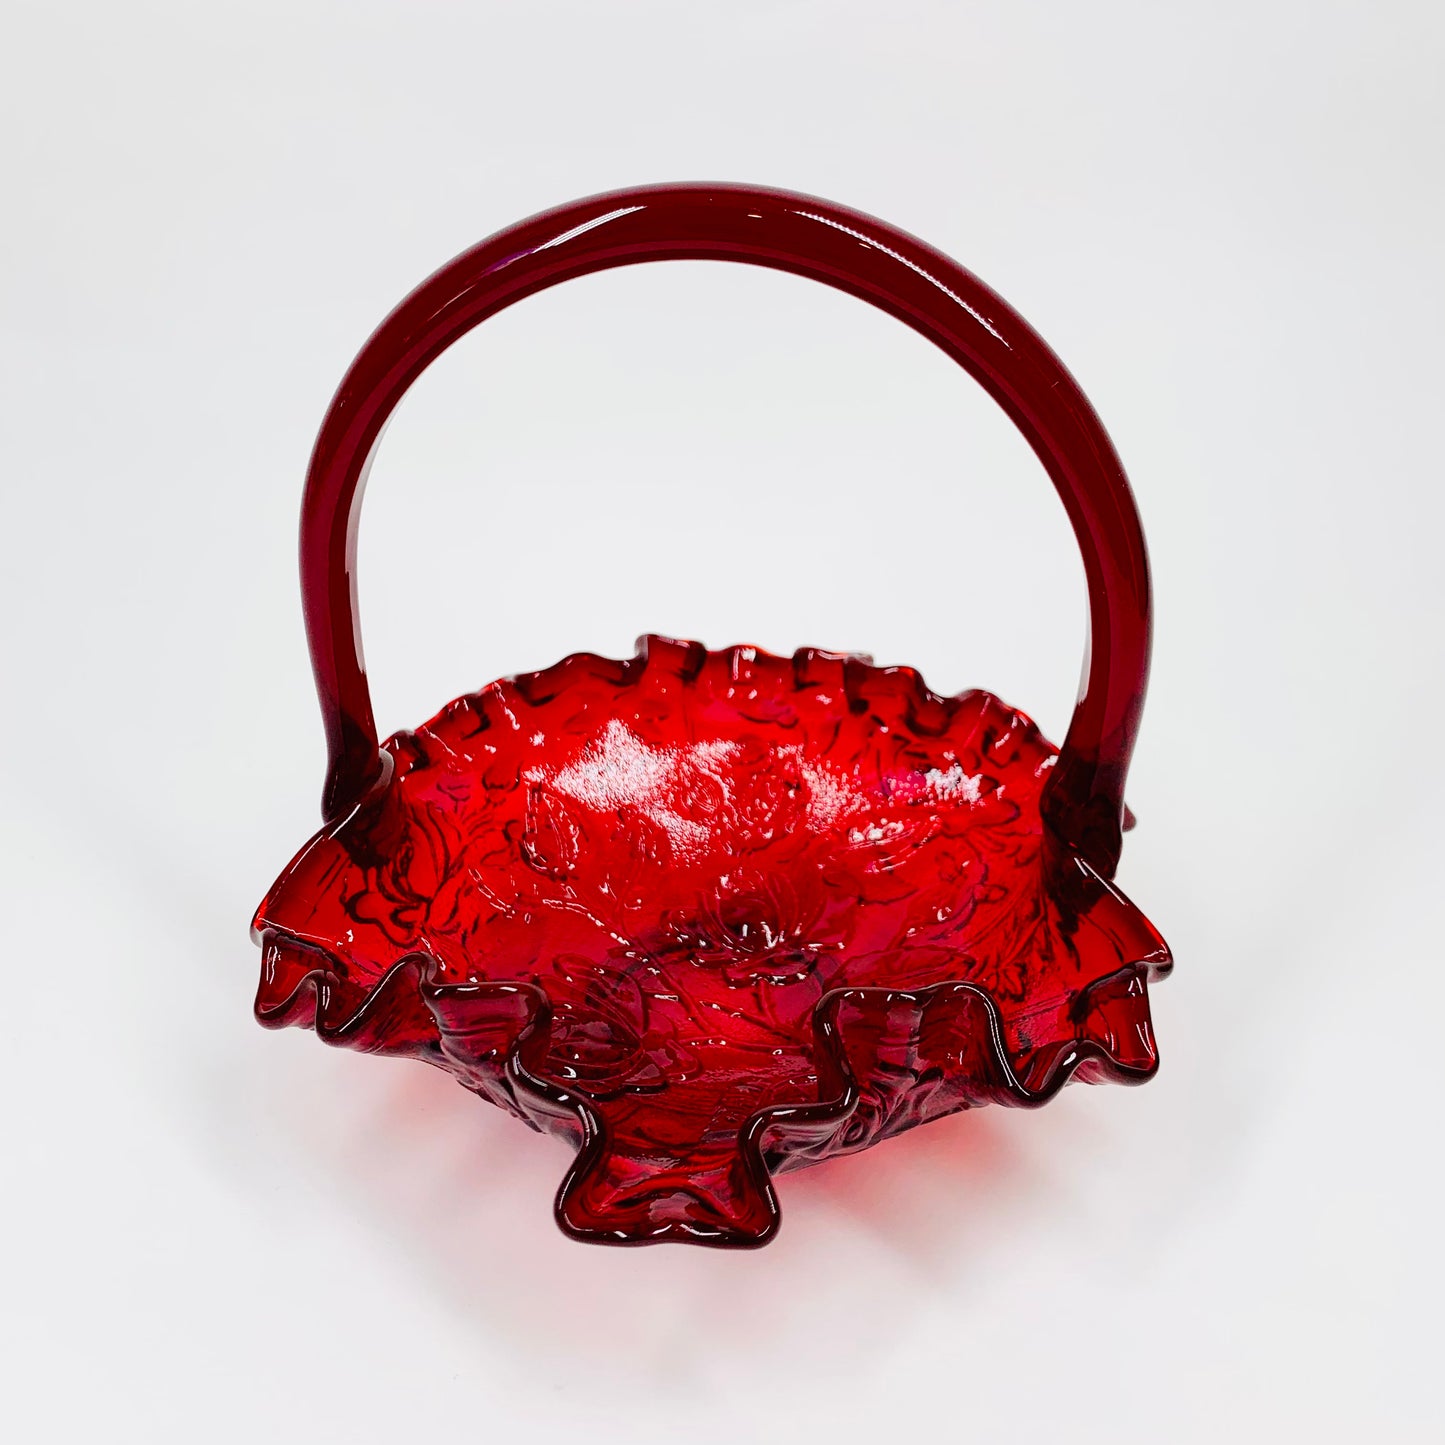 Antique Fenton red glass Viking basket with ruffle rim